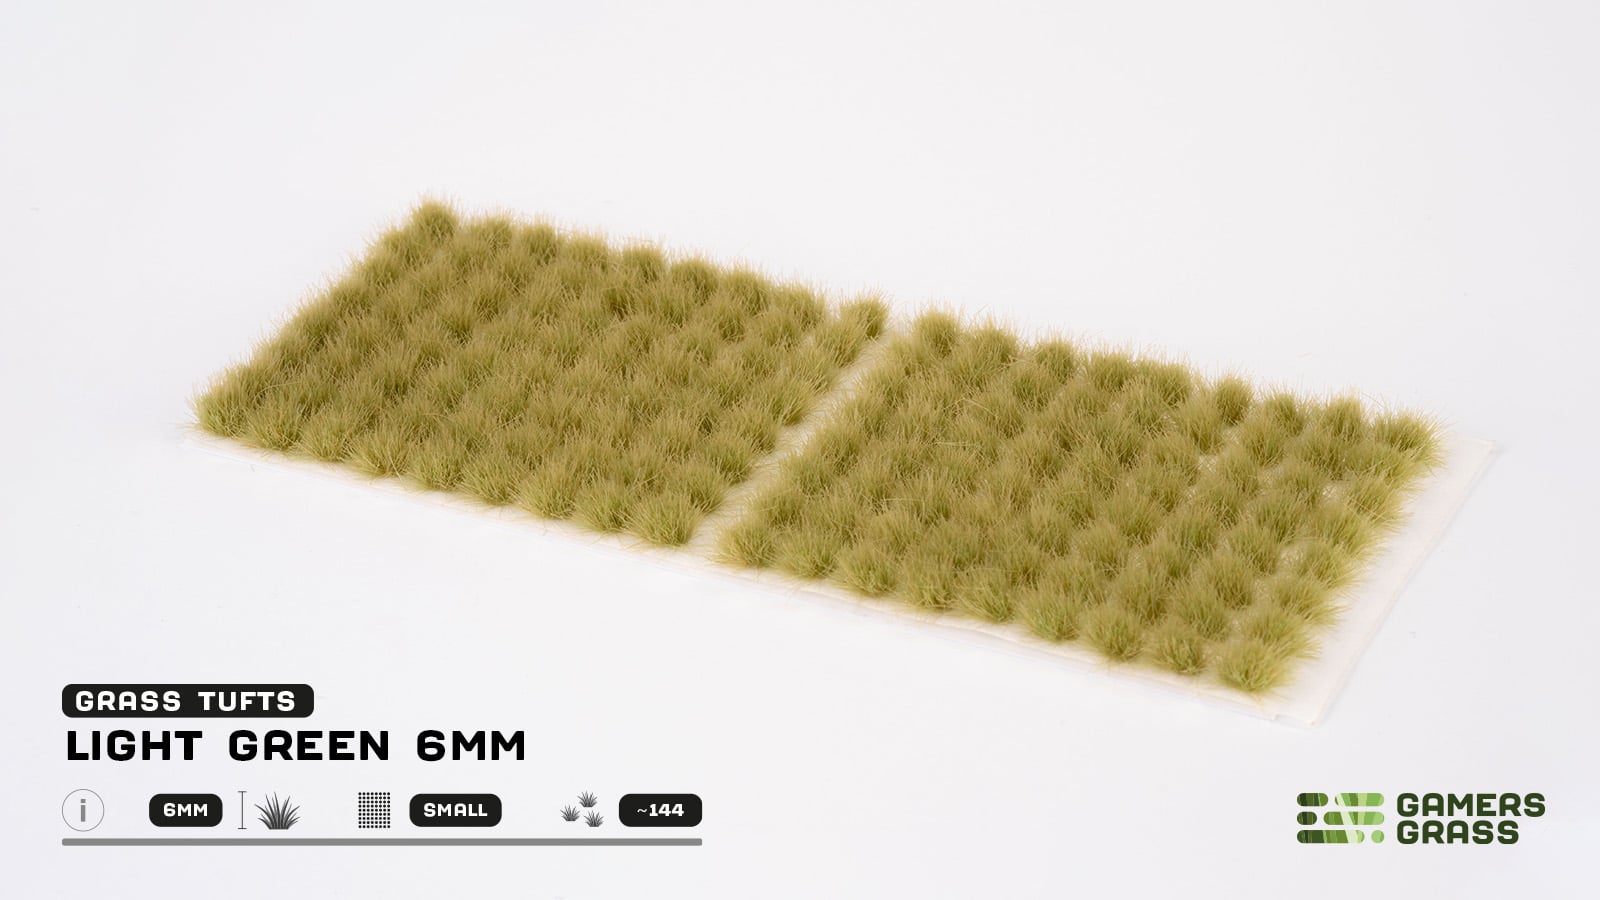 Light Green 6mm Tufts (Small) - Gamers Grass - 0